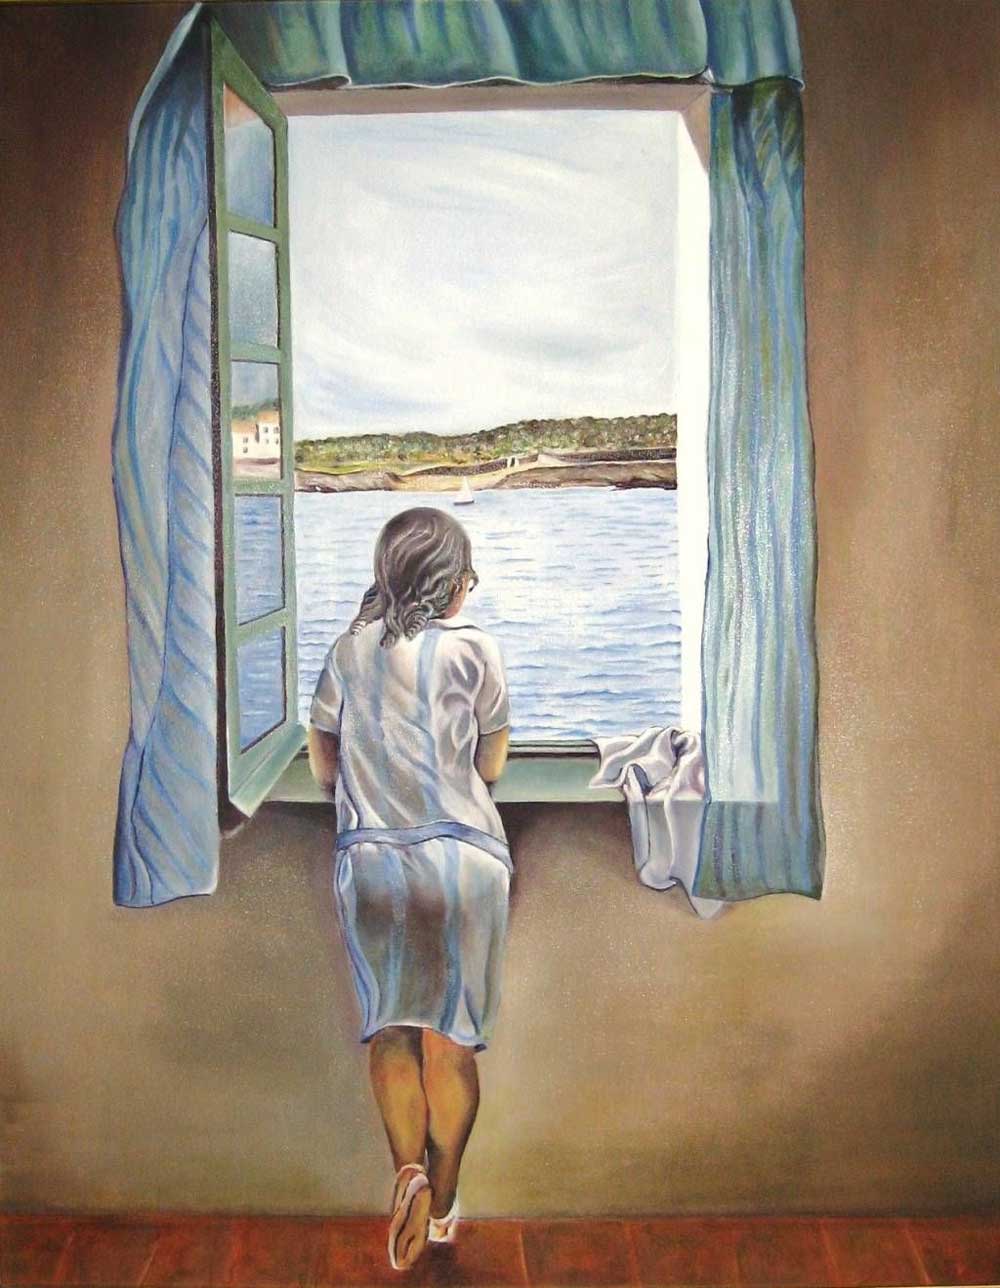 Chica en la ventana de Dalí